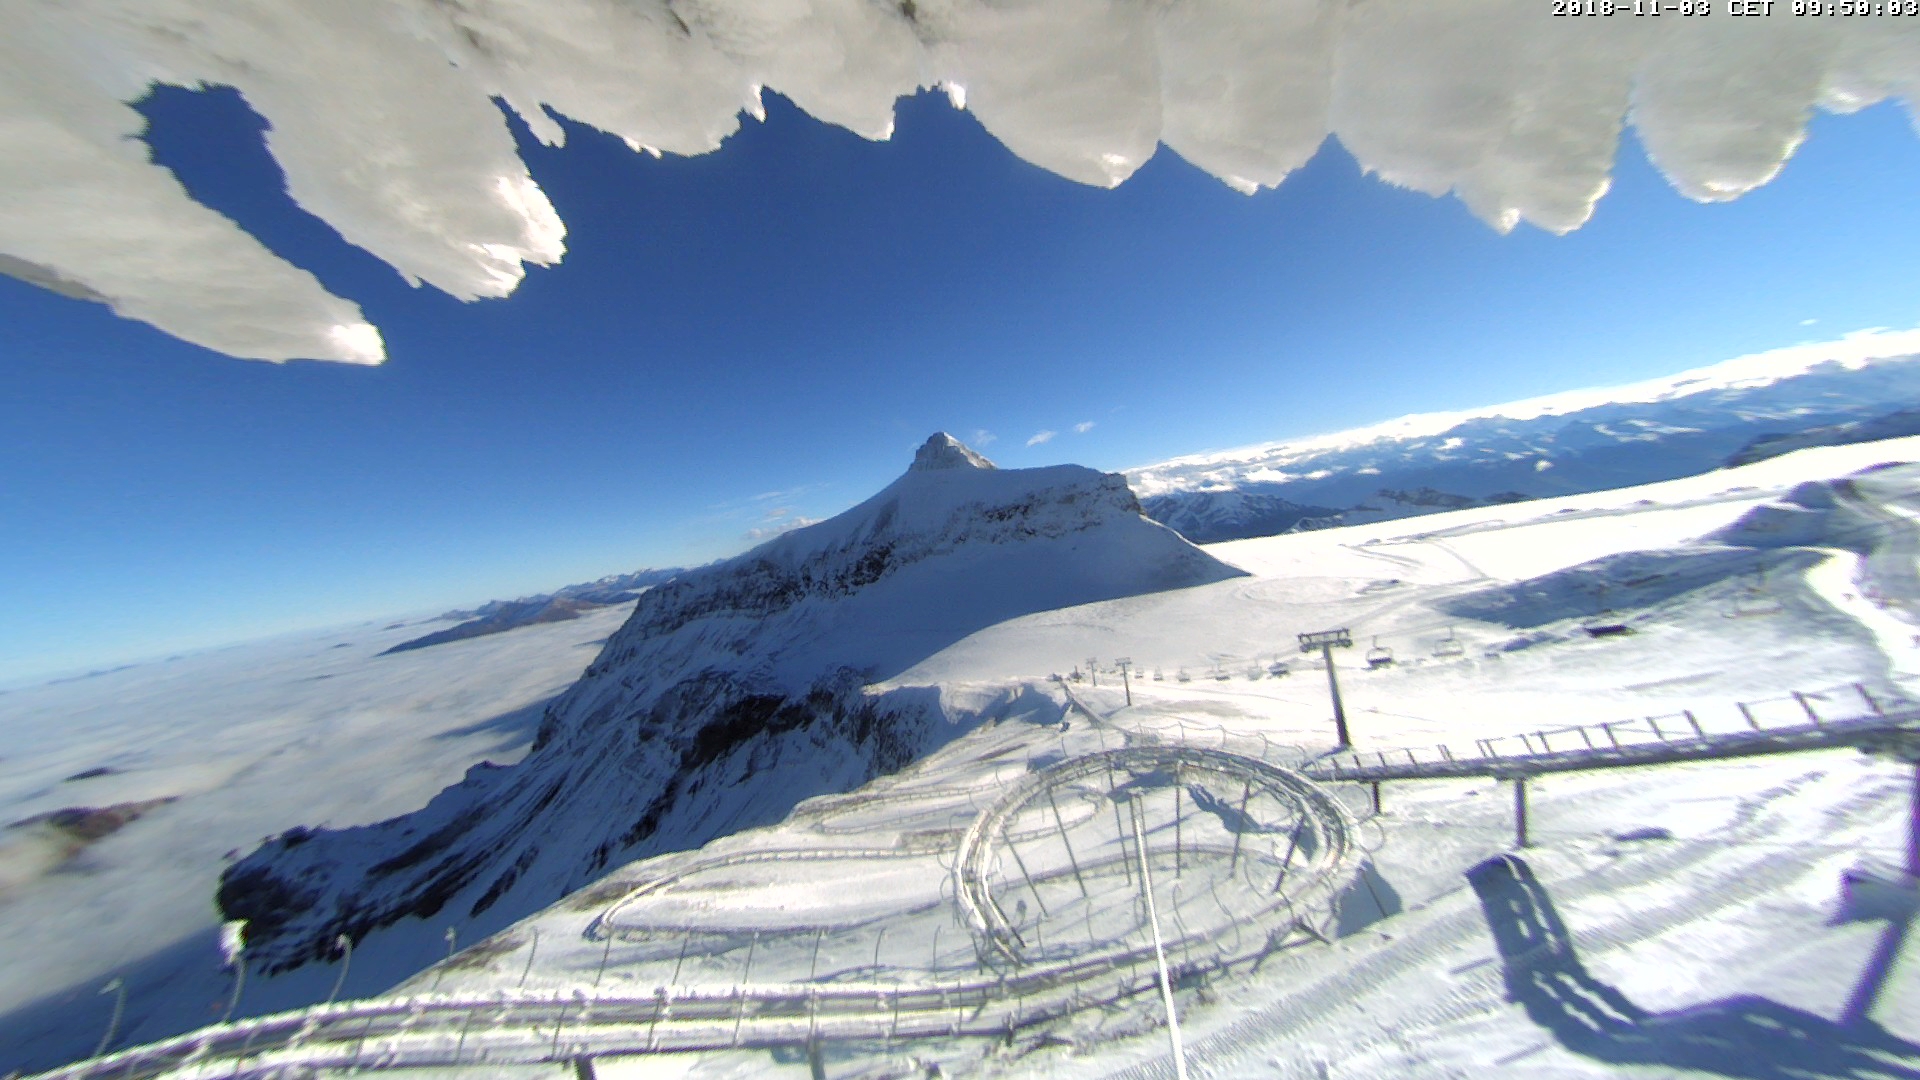 Simply beautiful, Gstaad Glacier 3000